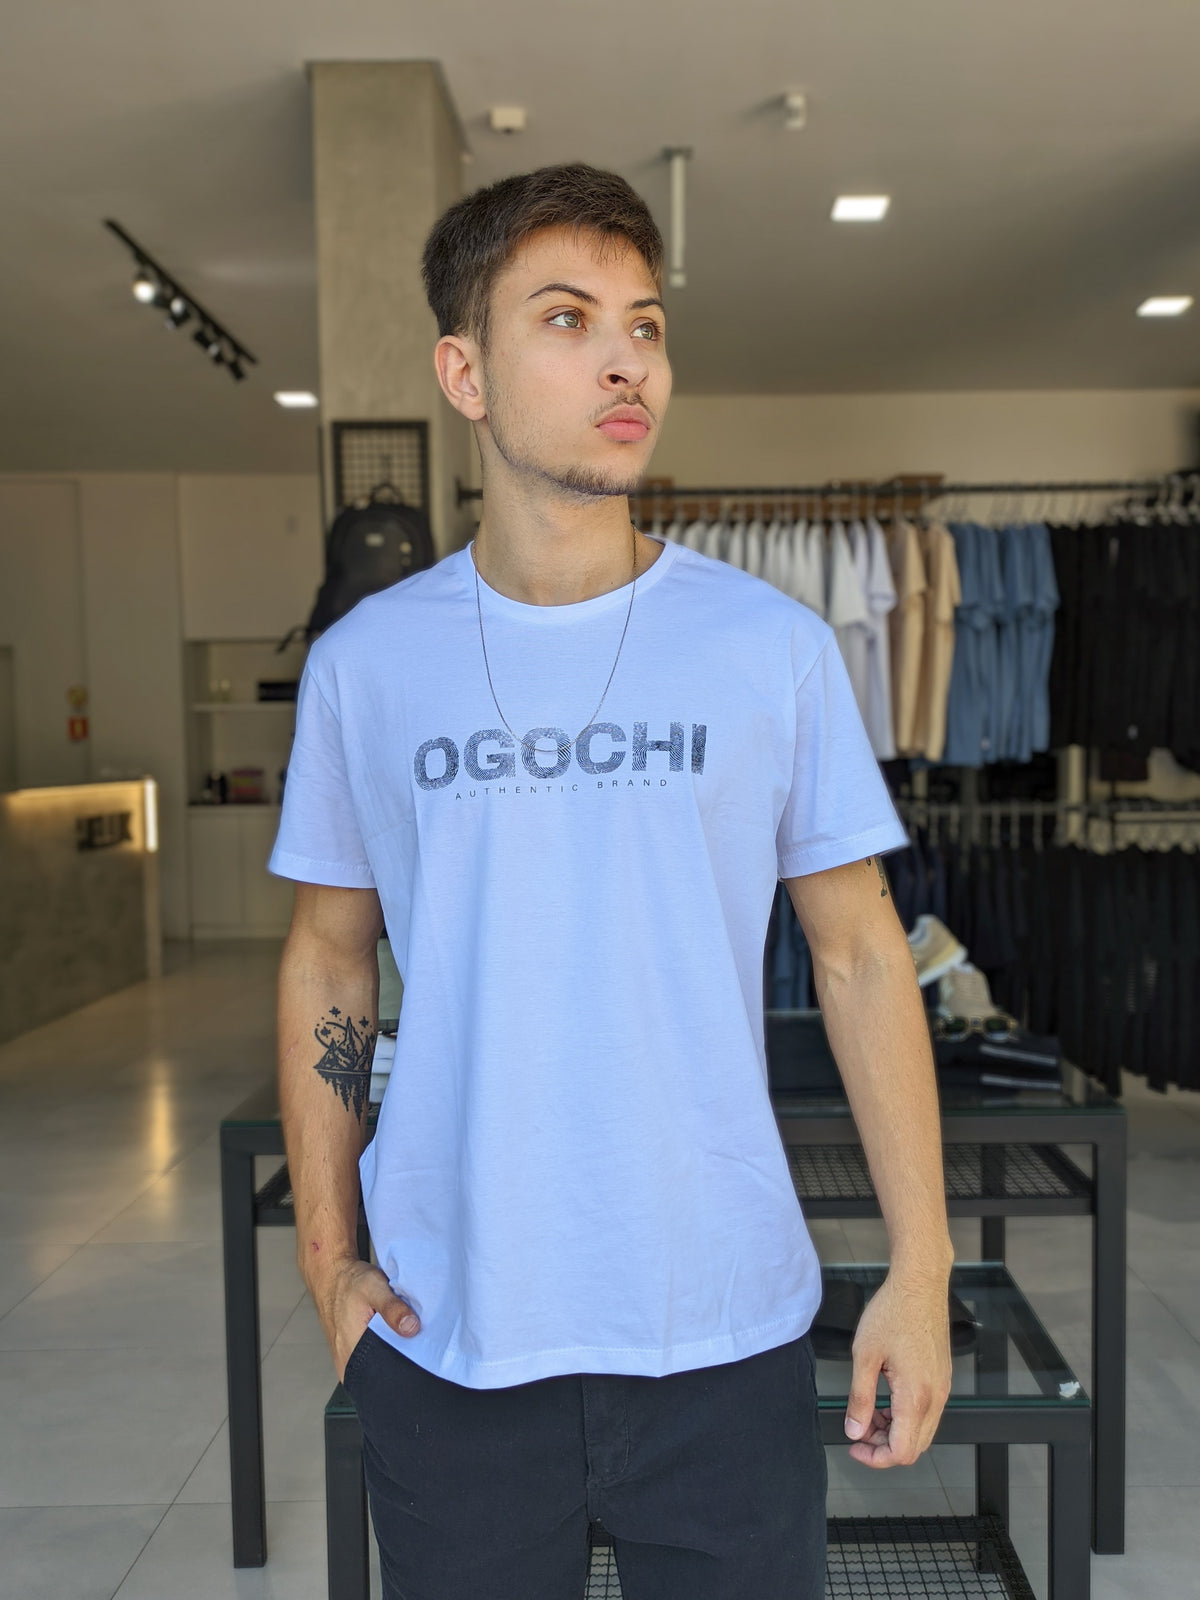 Camiseta Digital Ogochi